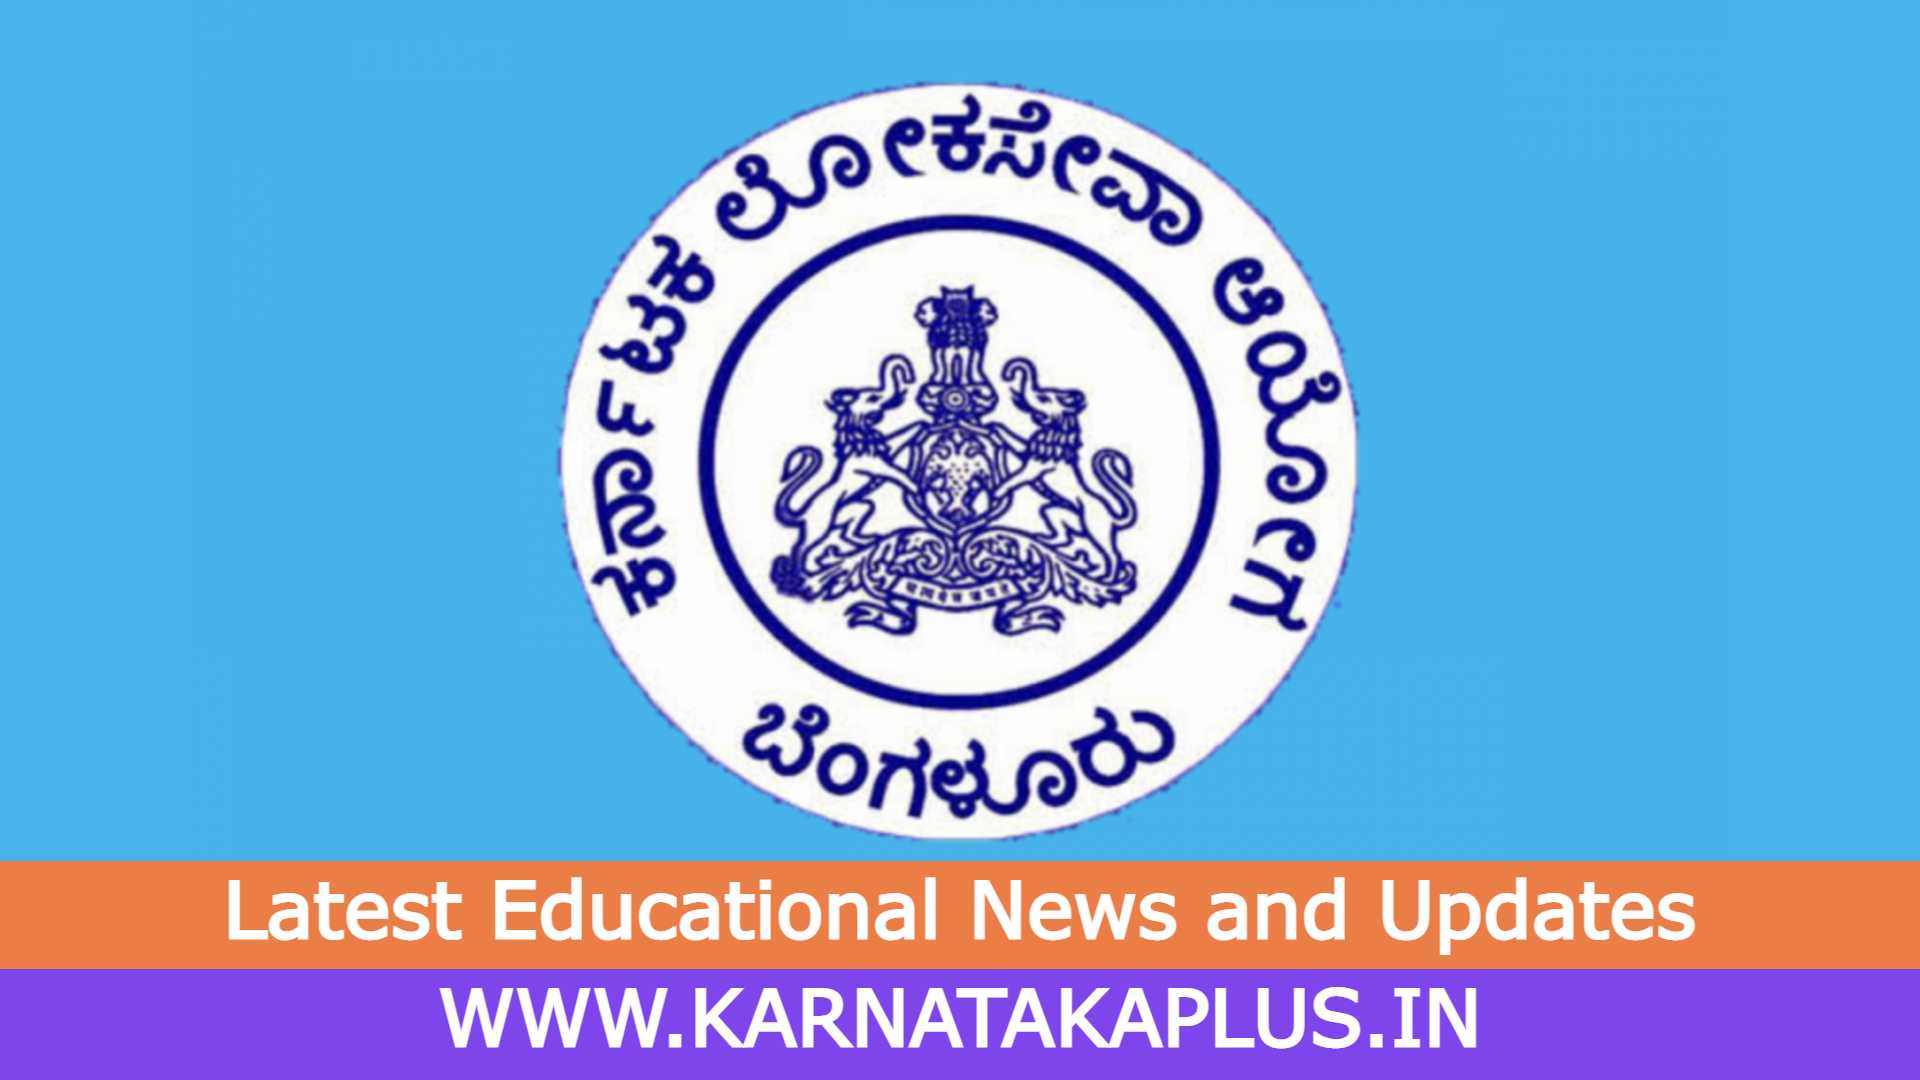 Karnataka Plus 3 Special Notice for FDA Exam Candidates PDF